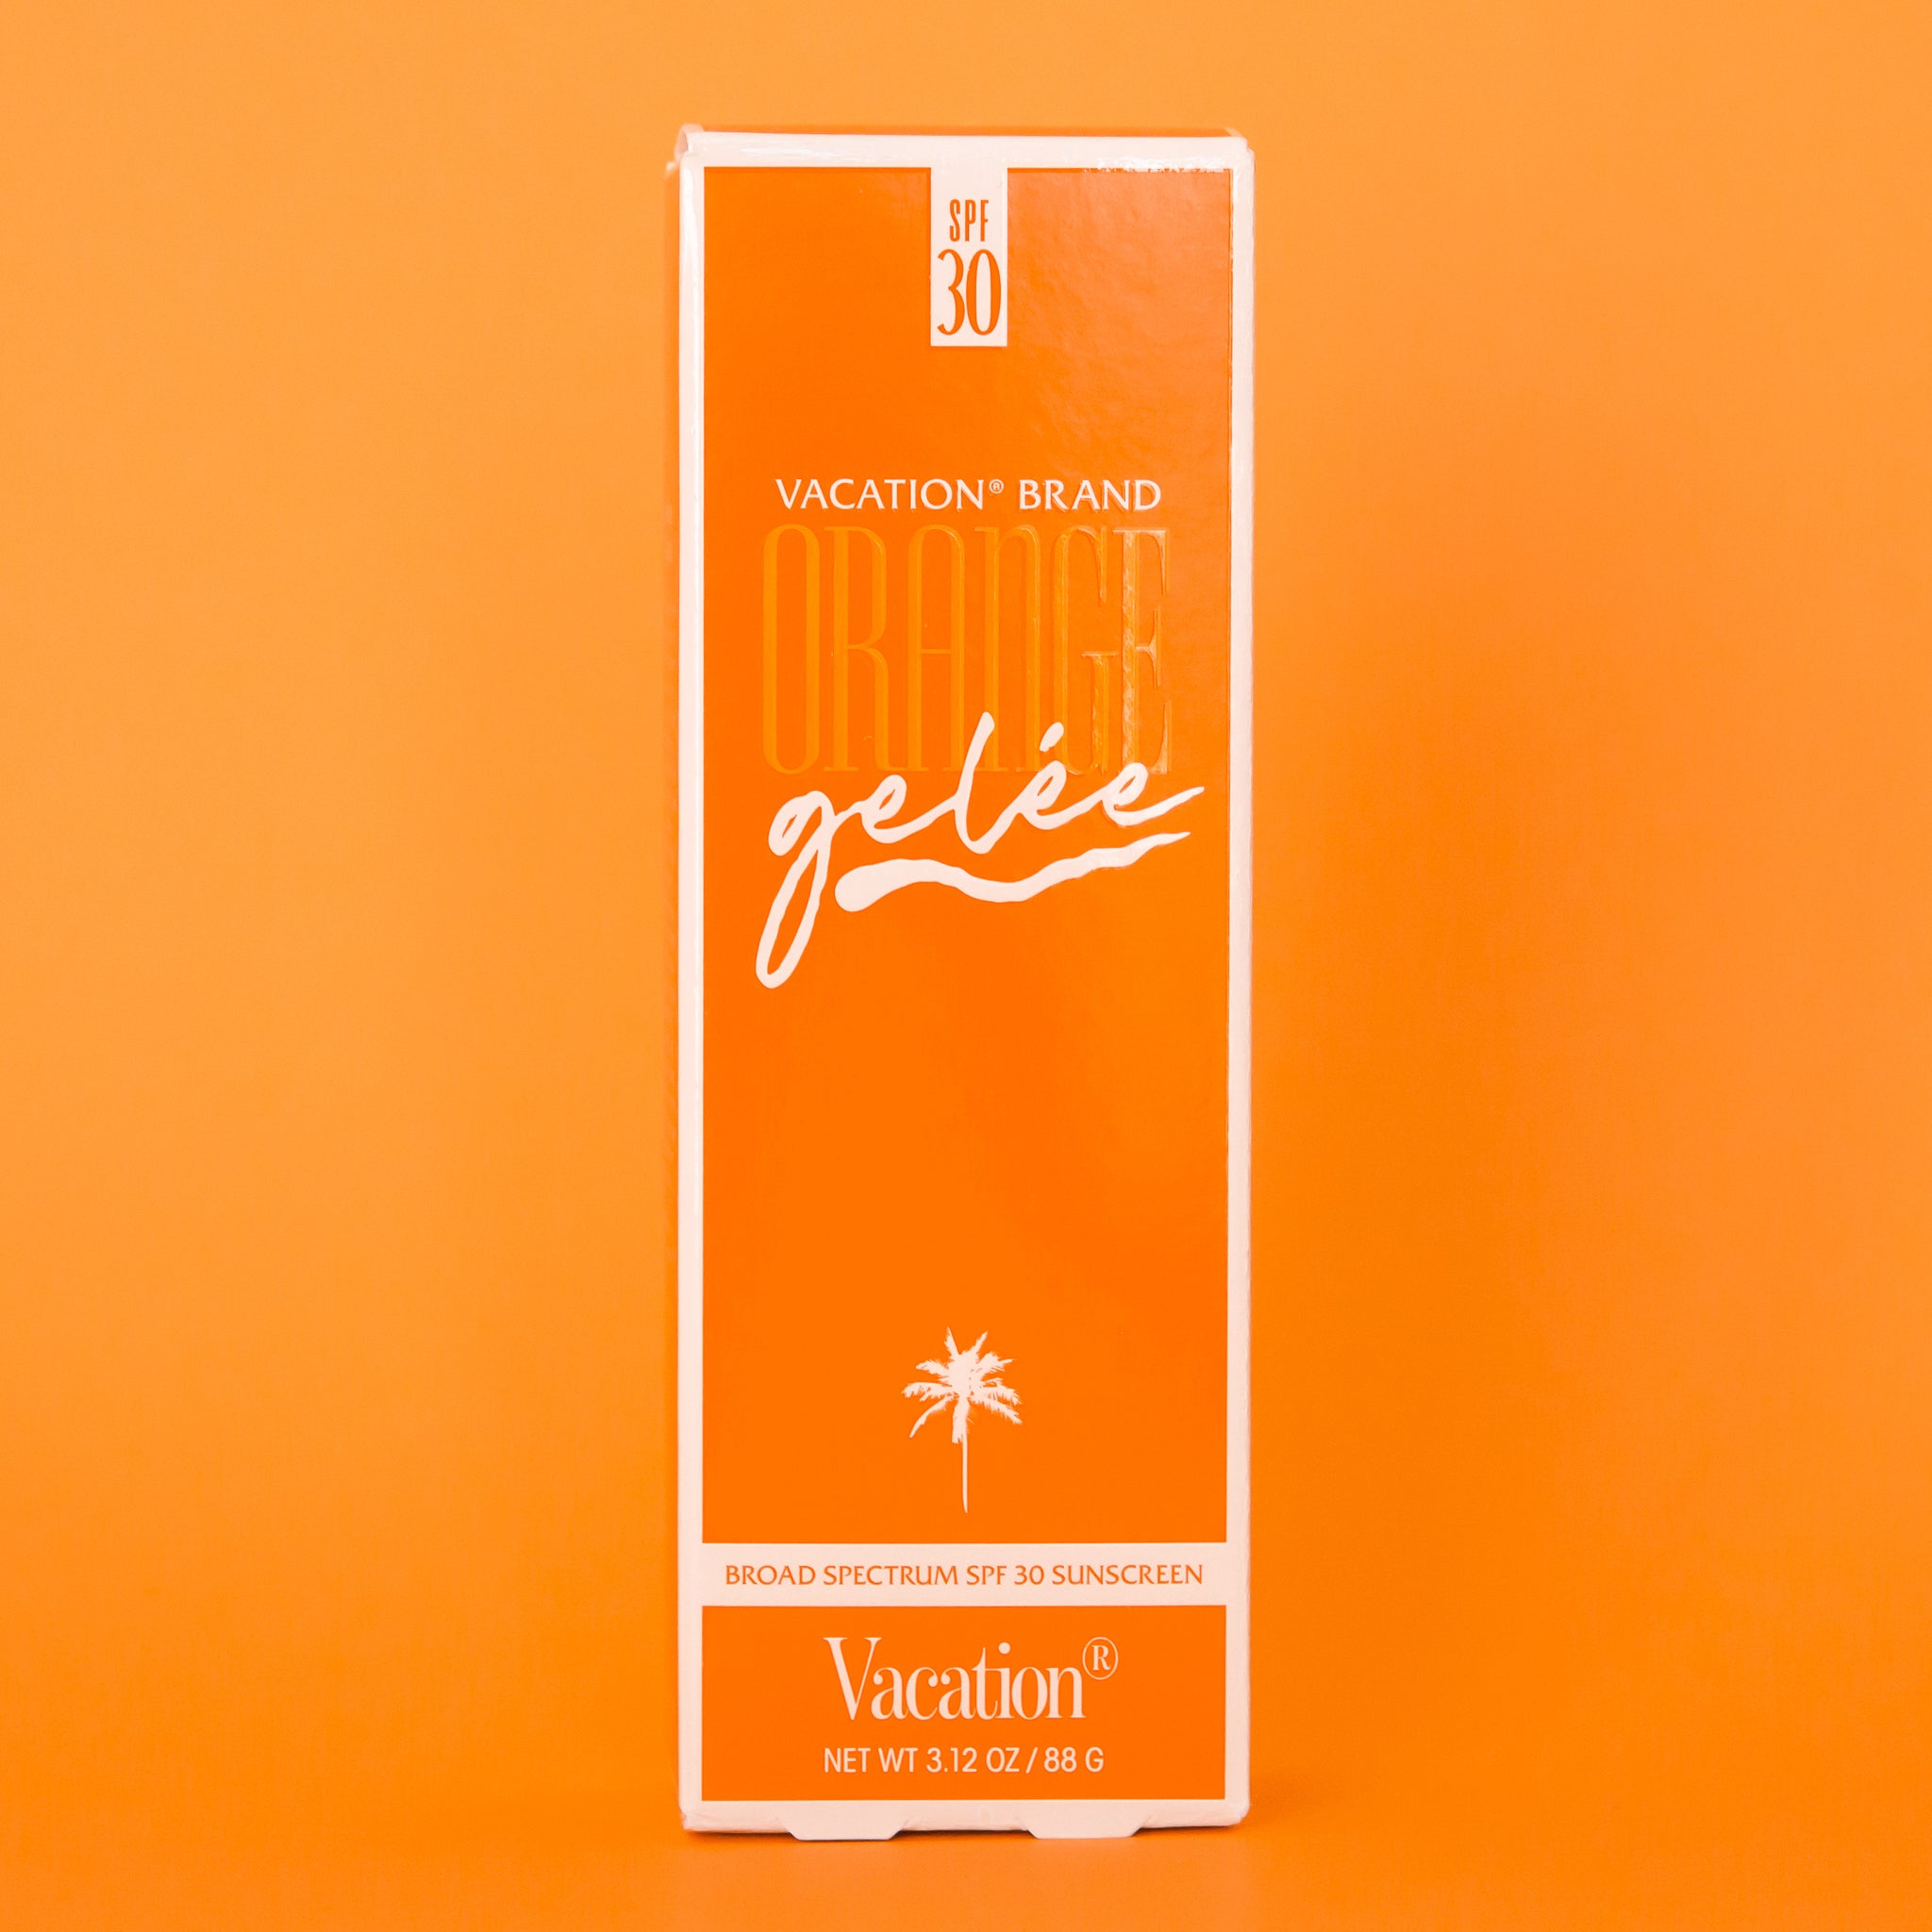 The orange packaging of the white tube of orange gelee sunscreen. 